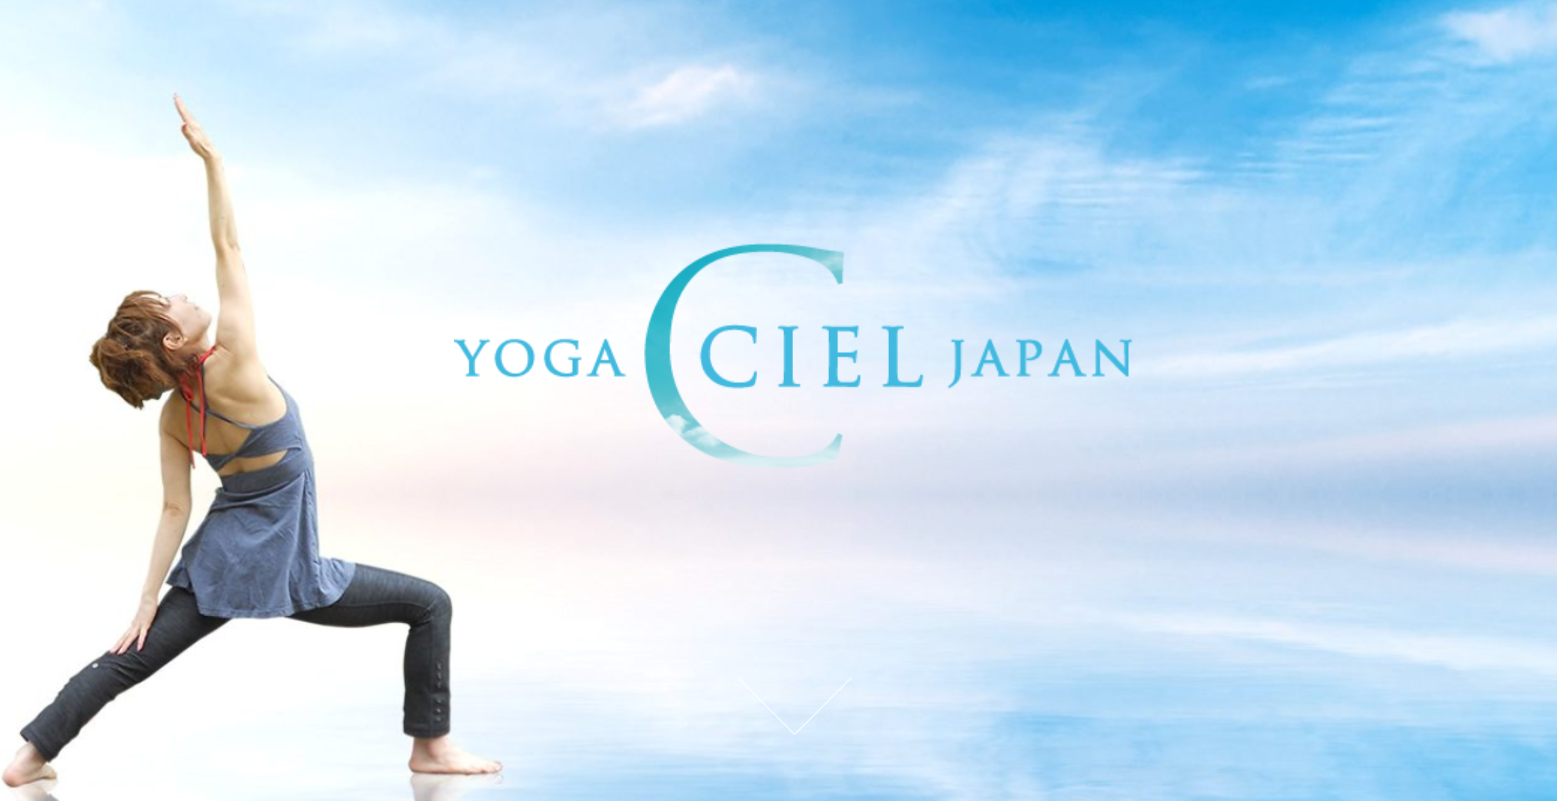 Yoga Ciel Japan（ヨガシエルジャパン）